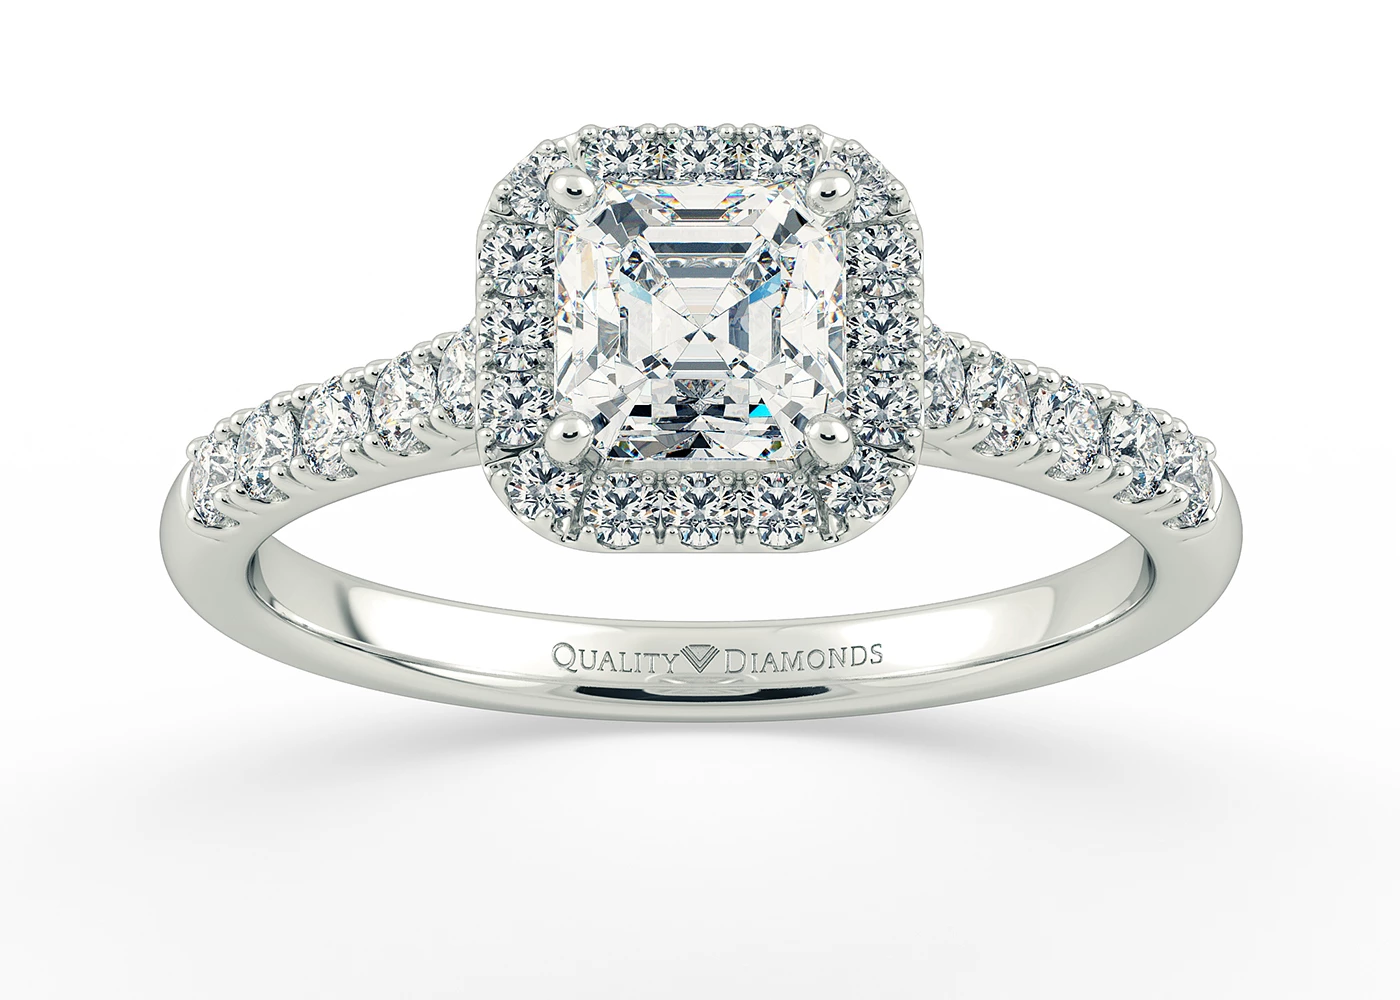 Half Carat Asscher Halo Diamond Ring in Platinum 950